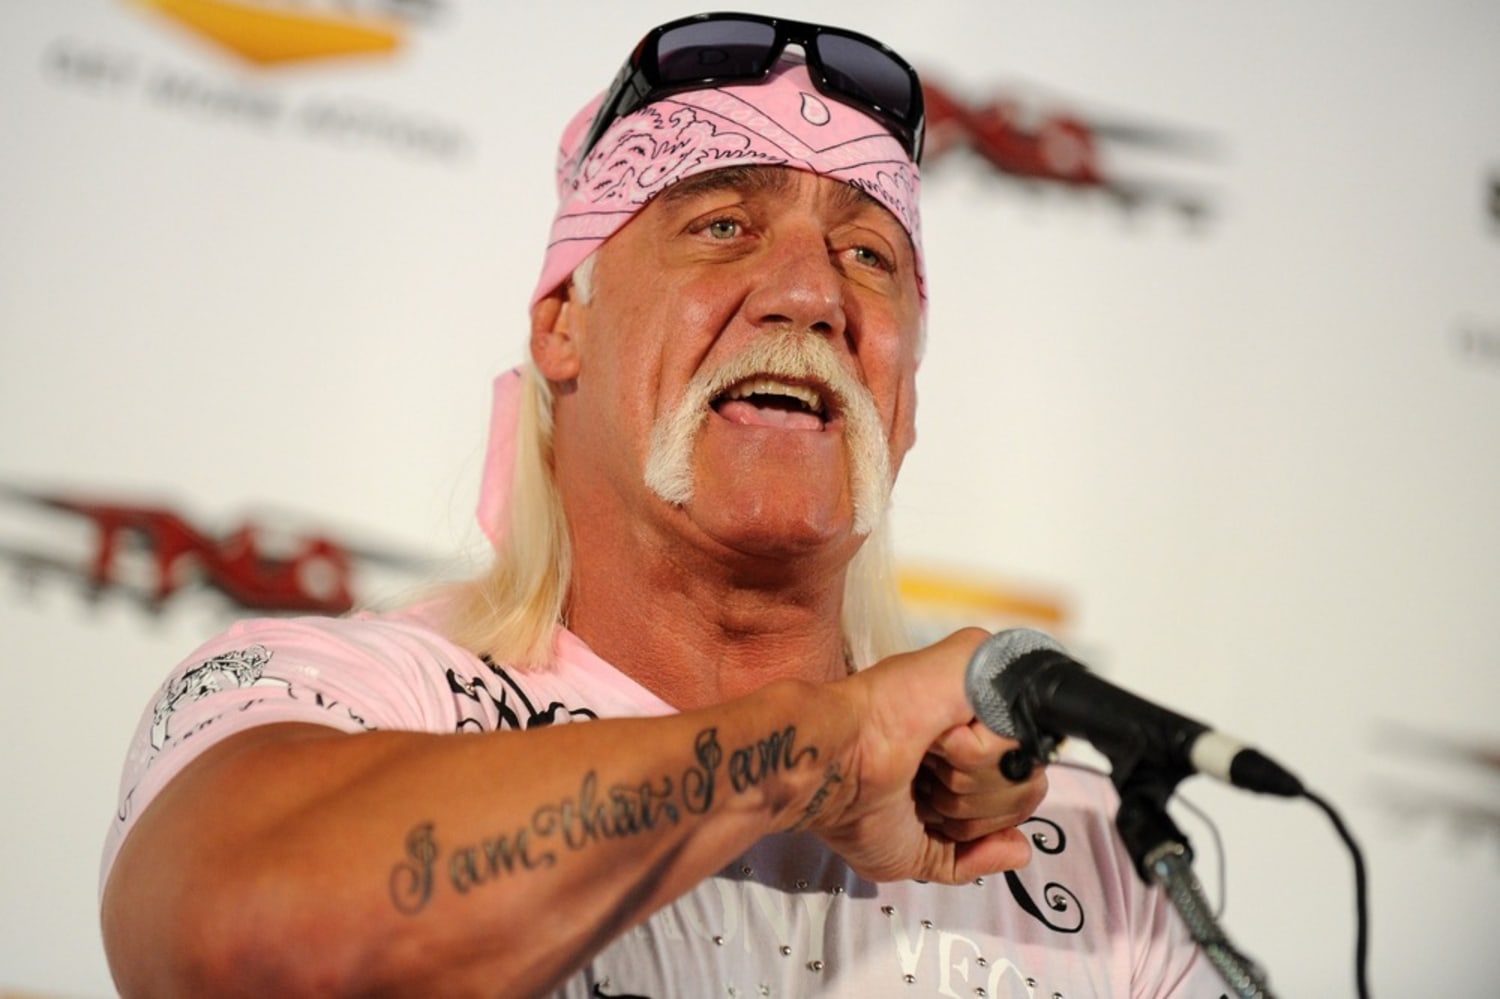 Hulk Hogan sex tape Shop it at your own risk image